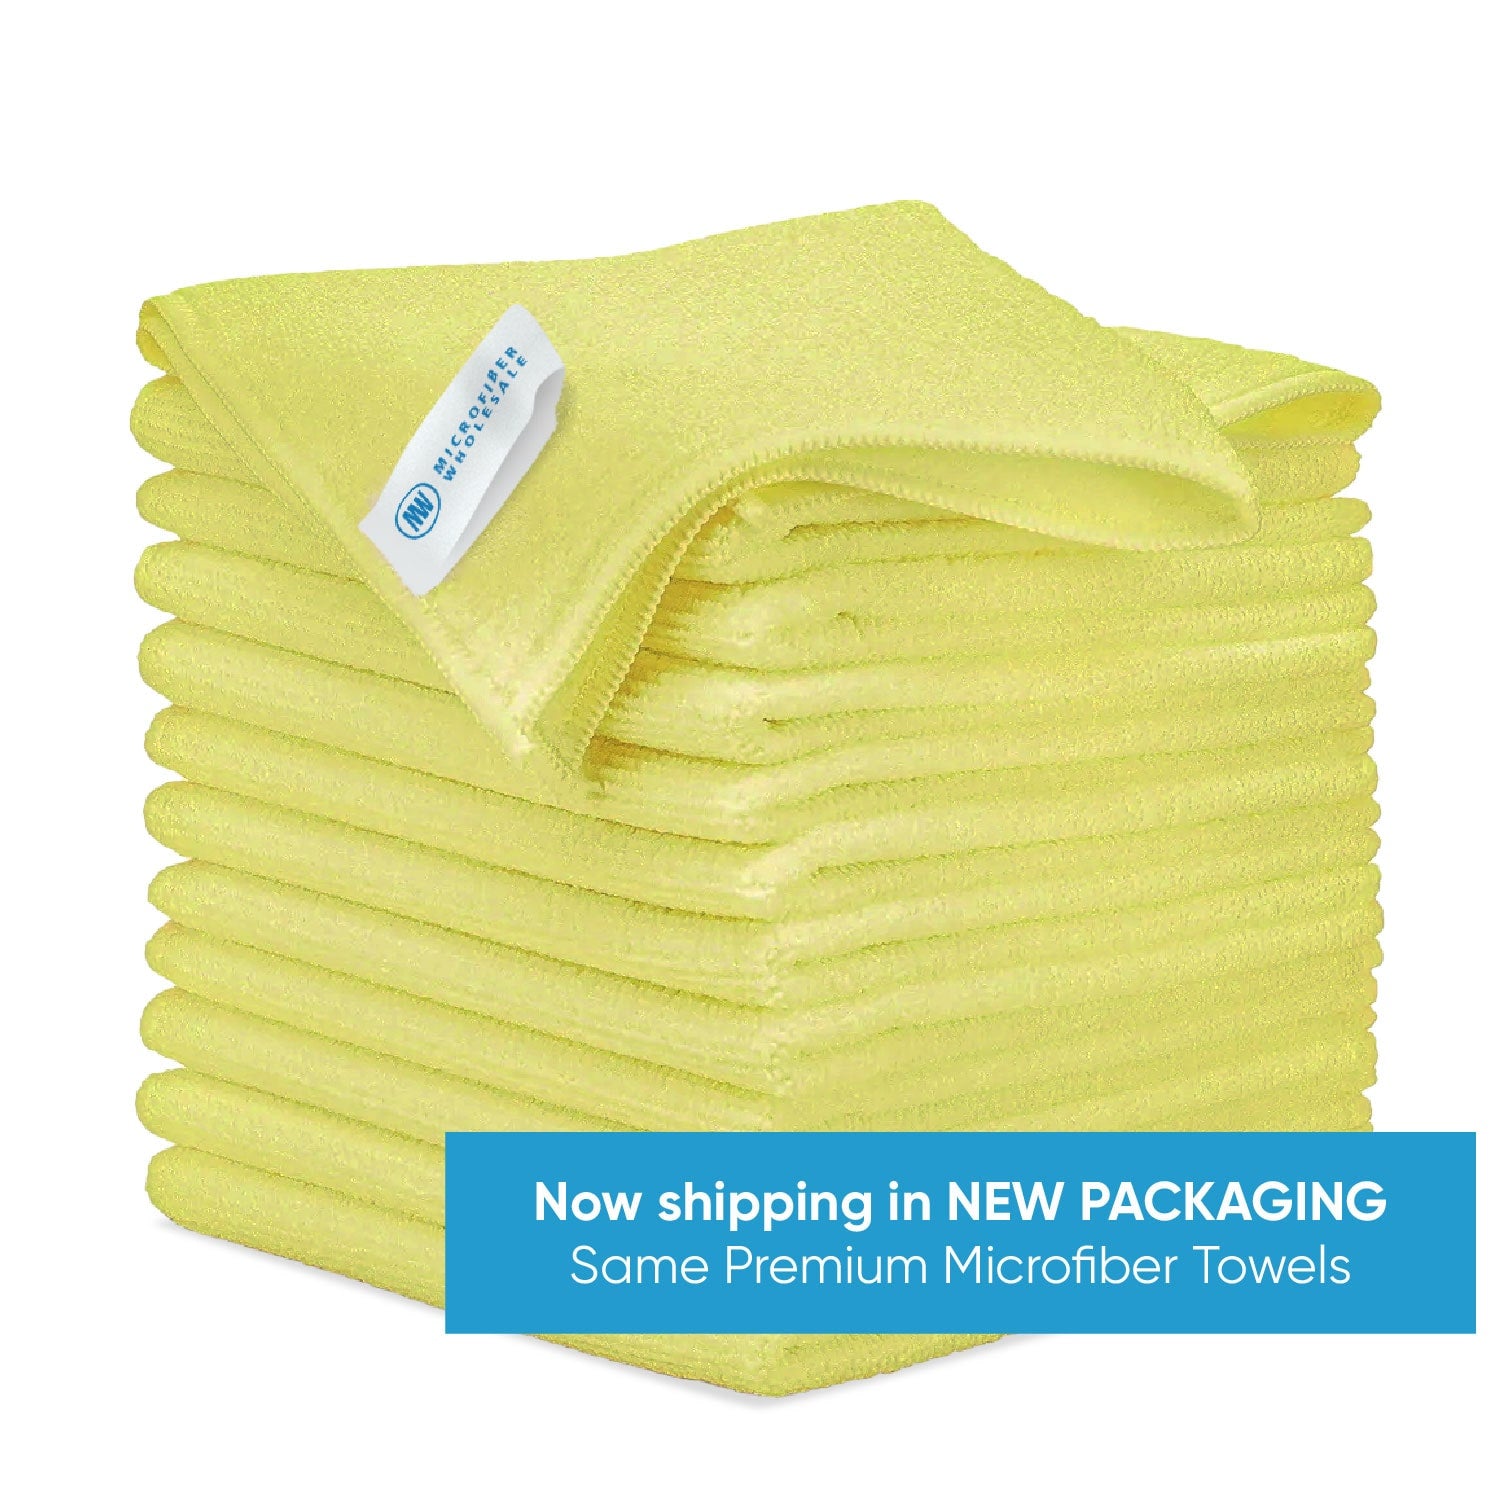 Prep Werx 12-Count Microfiber Cleaning Cloths - Microfiber Towels